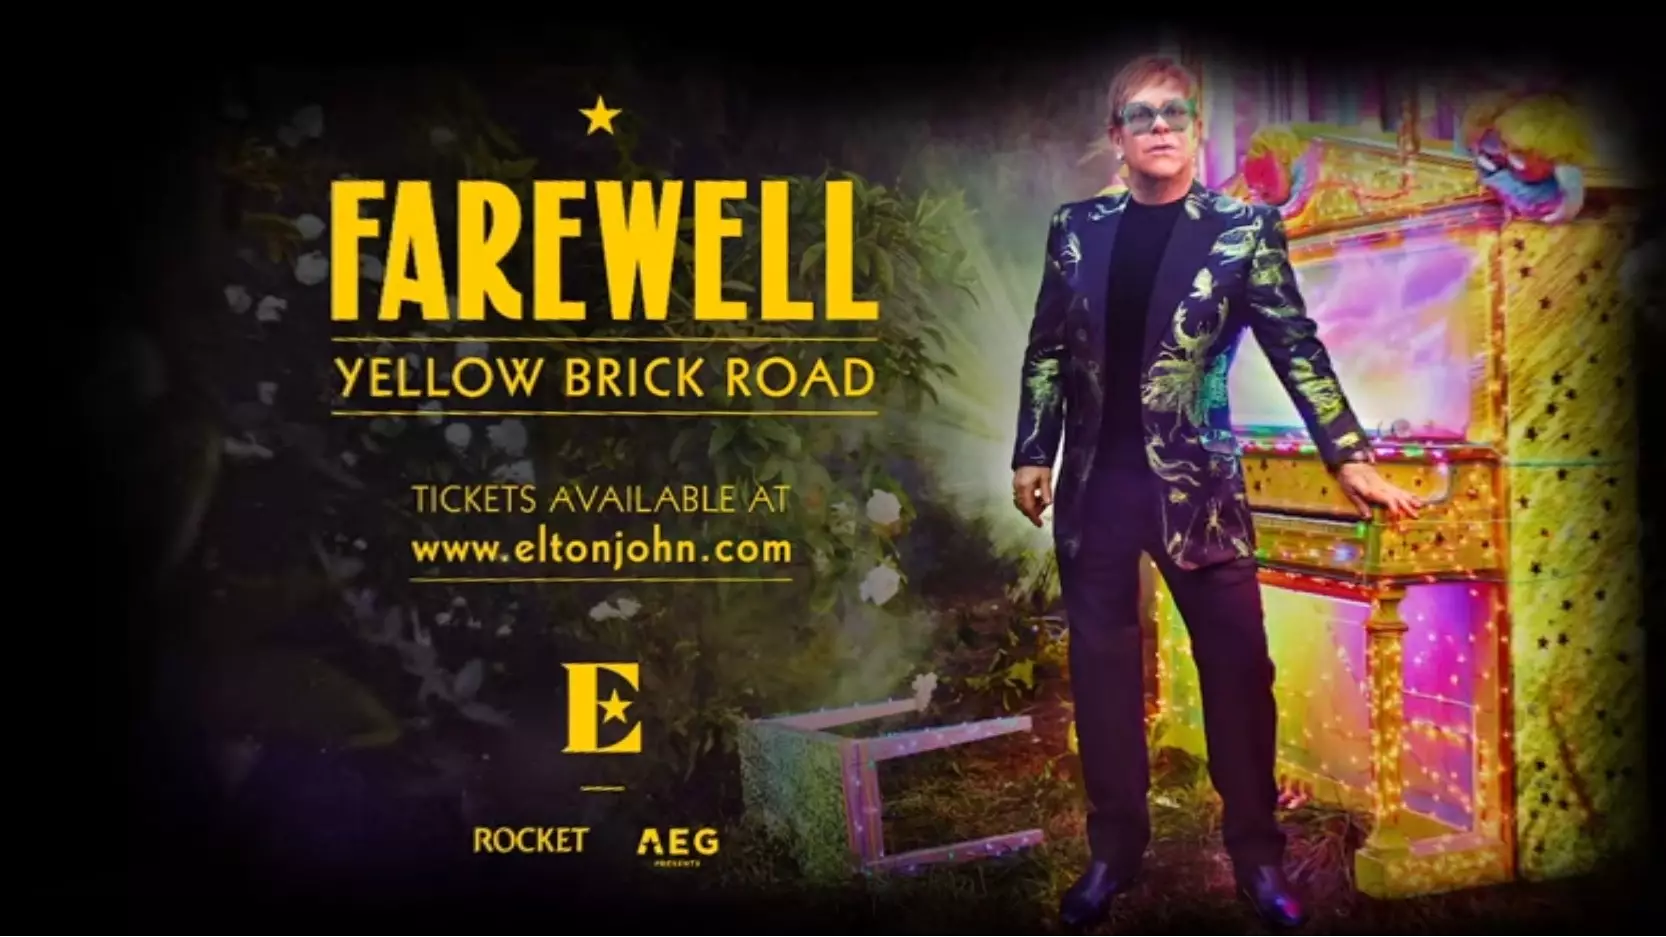 Elton John World Tour Dates & Details Have Just Been Announced